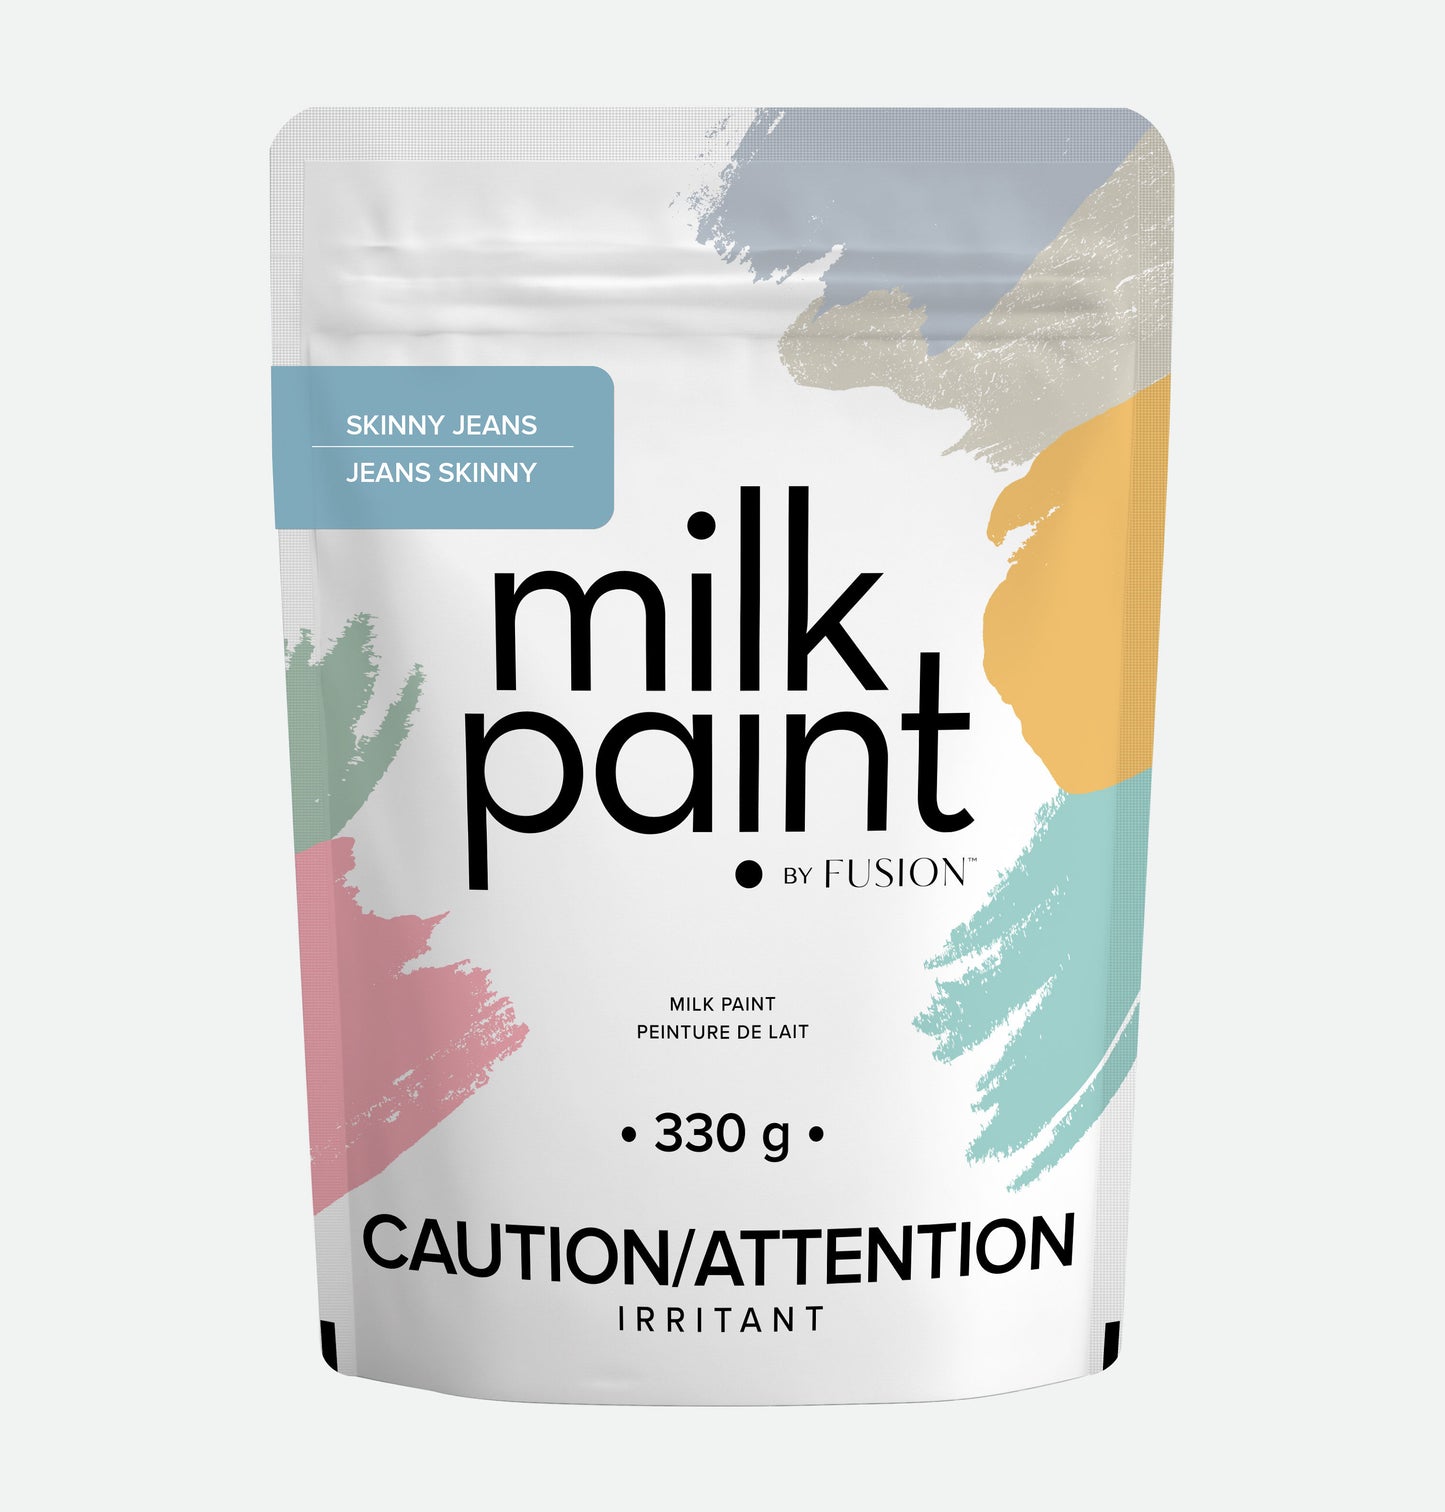 Fusion Milk Paint SKINNY JEANS